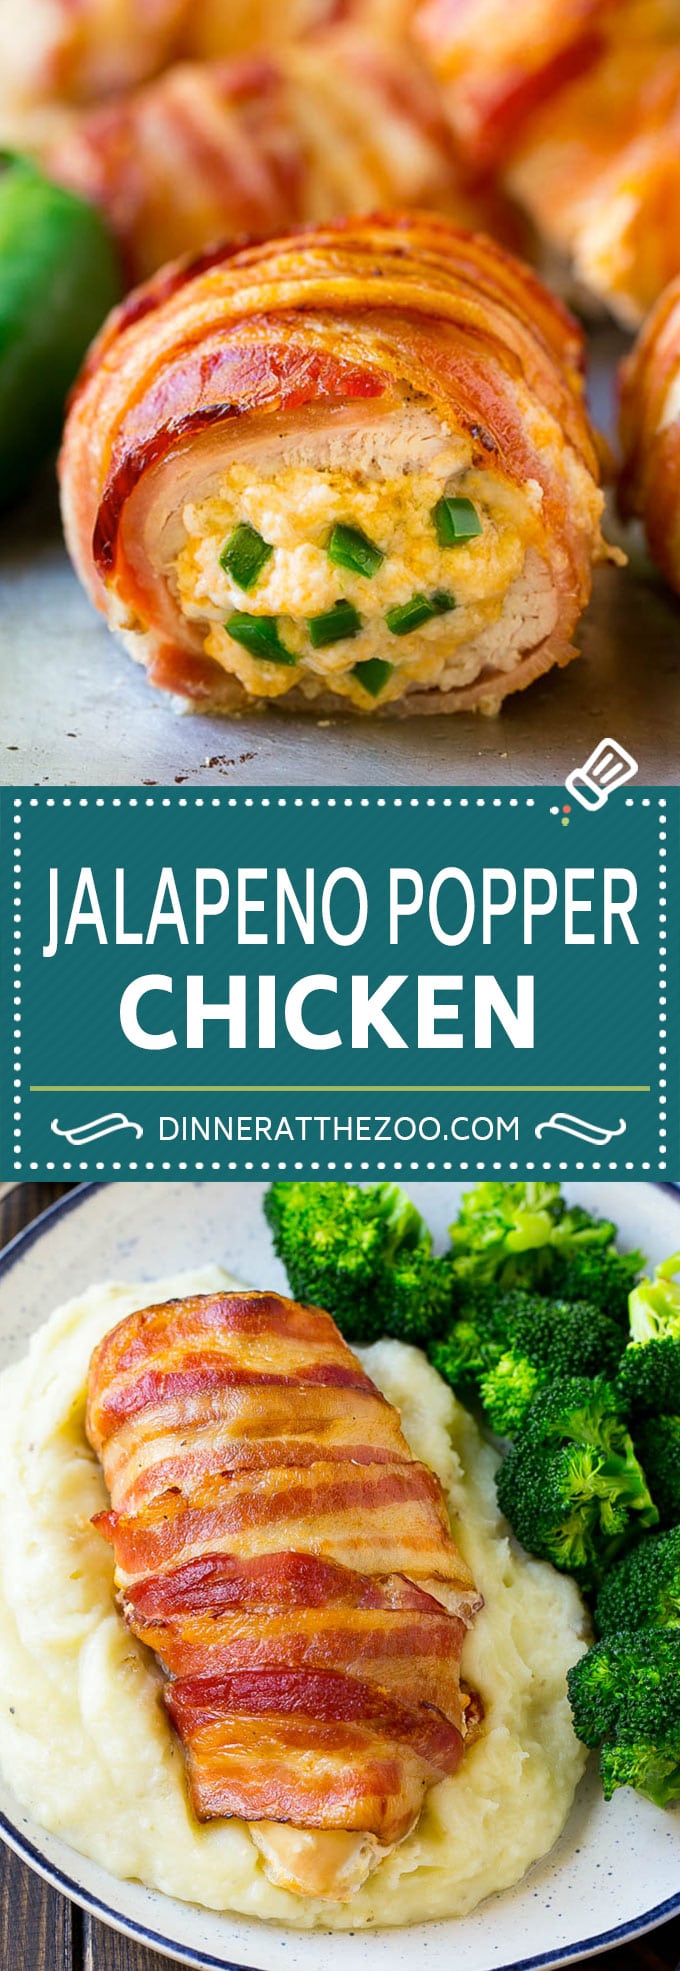 Jalapeno Popper Chicken Recipe | Bacon Wrapped Chicken | Stuffed Chicken | Low Carb Chicken #chicken #lowcarb #keto #bacon #jalapenos #cheese #dinner #dinneratthezoo